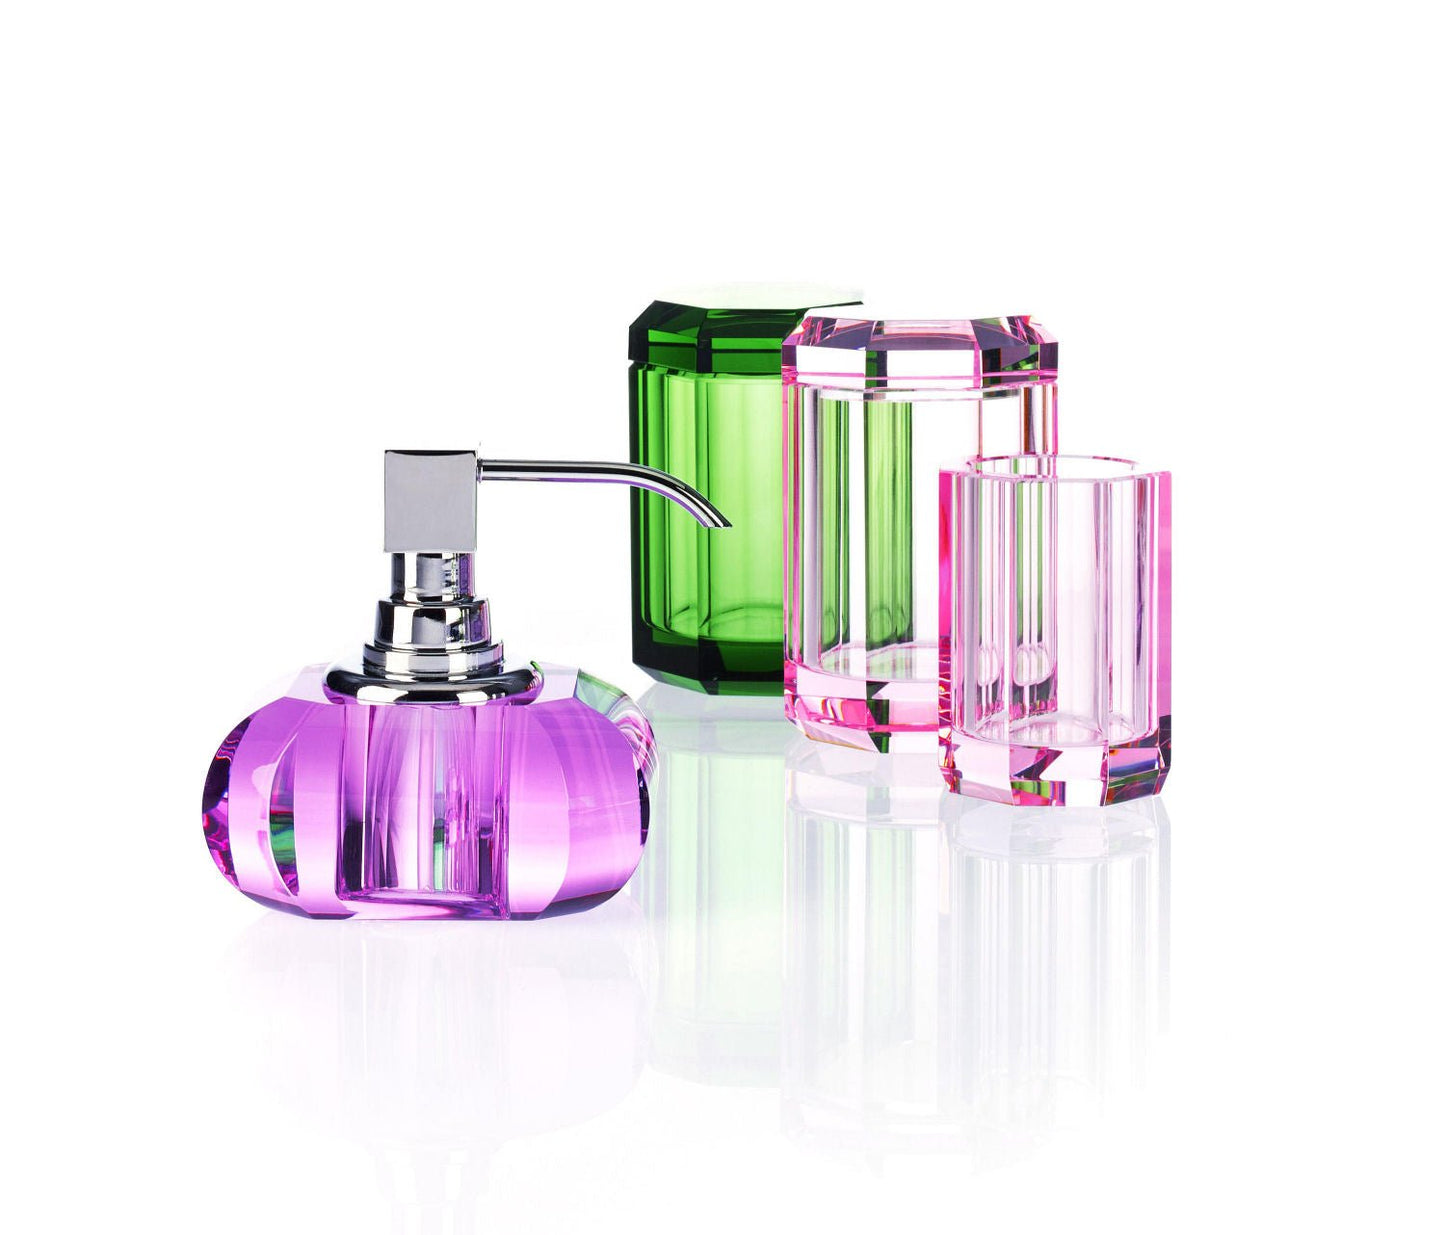 Luxury Matt Gold Liquid Soap Glass Dispenser | Violet - |VESIMI Design|